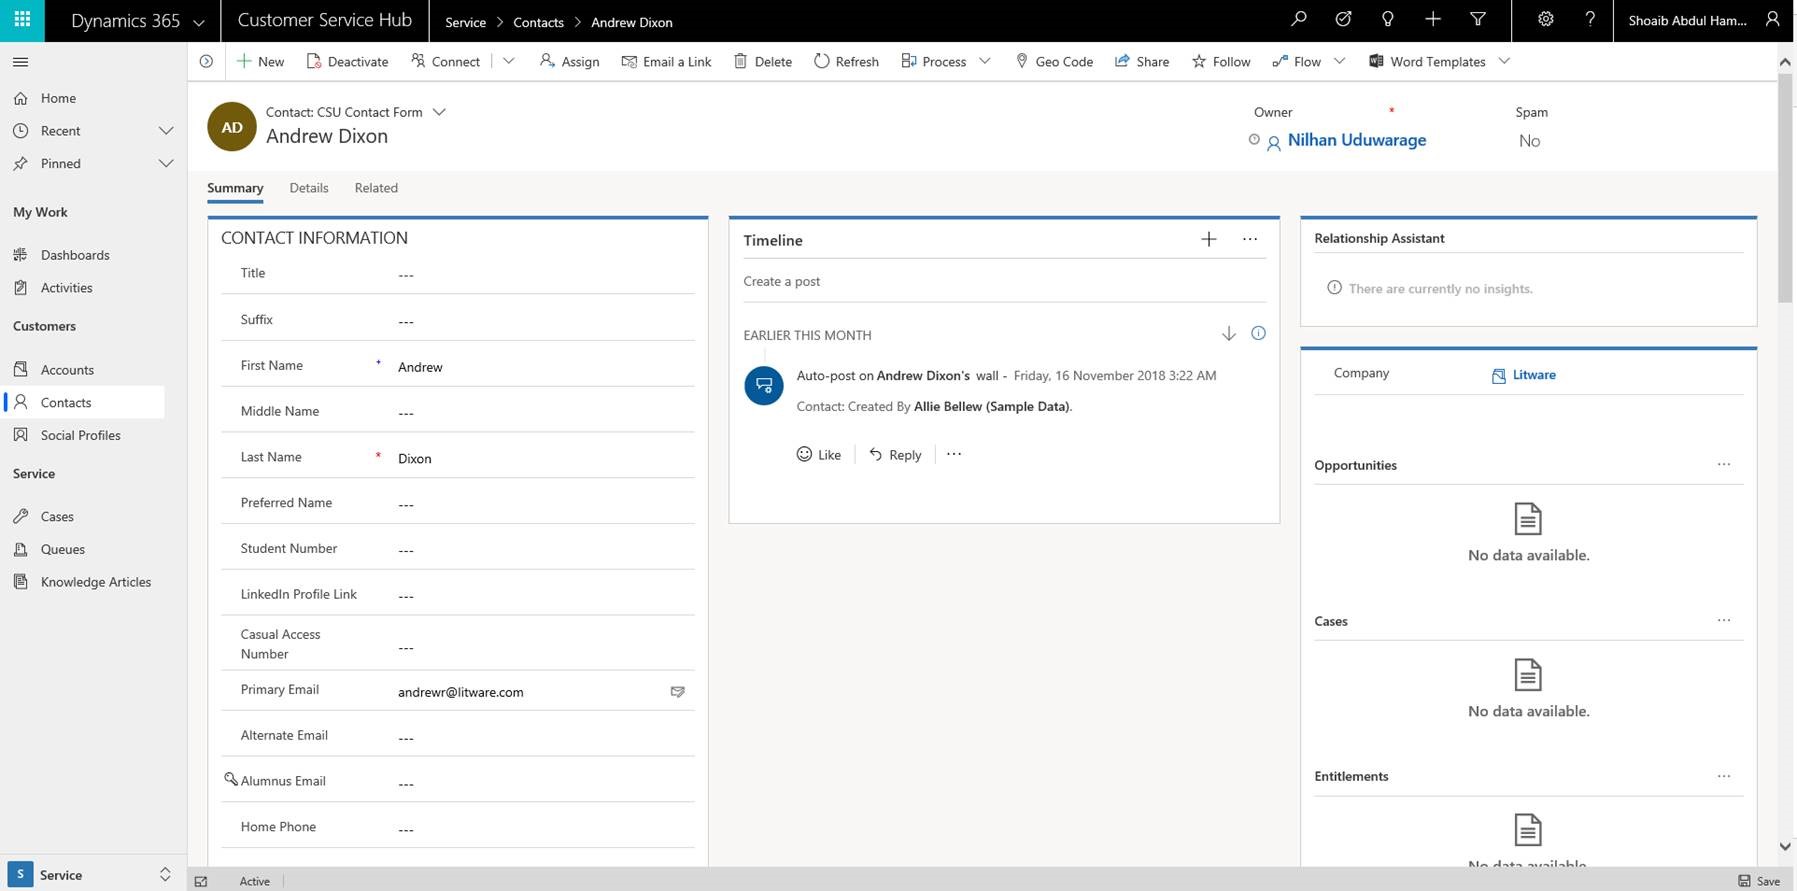 Contact Management screenshot from Microsoft Dynamics 365